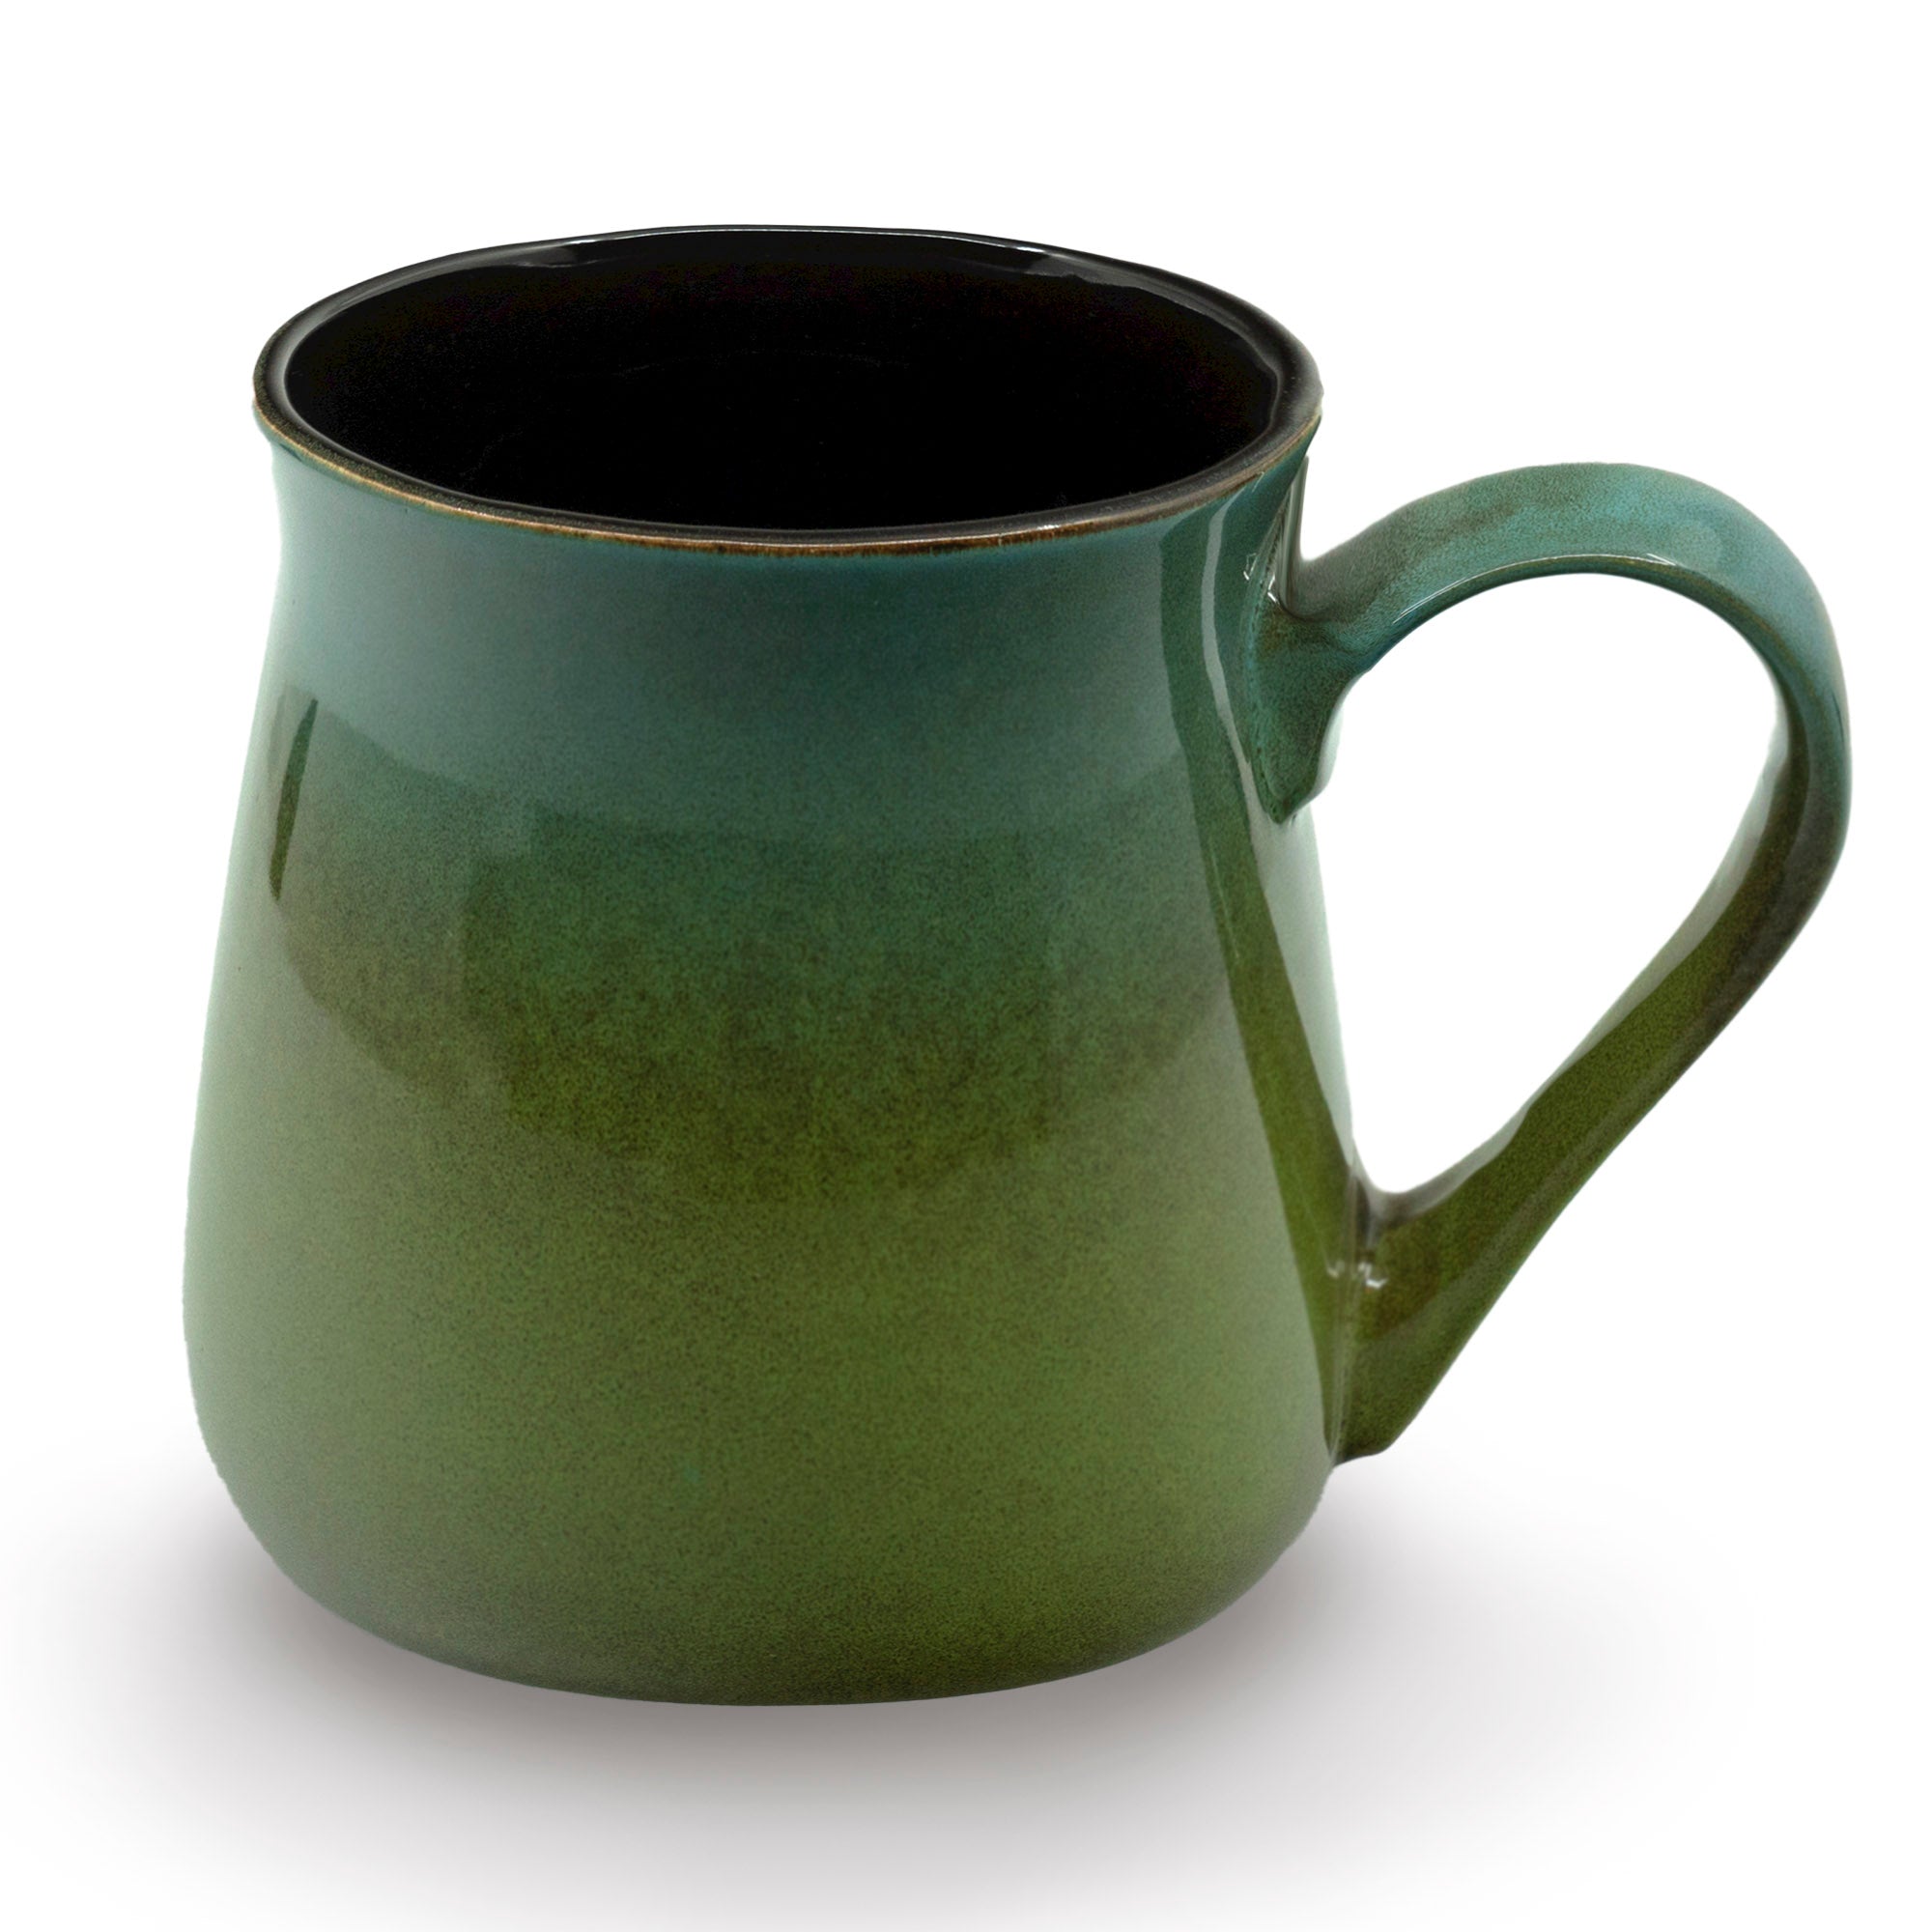 Porcelain 24 Oz White Large Coffee Mug, Big Handle Mug Set for Cereal, Tea,  Soup